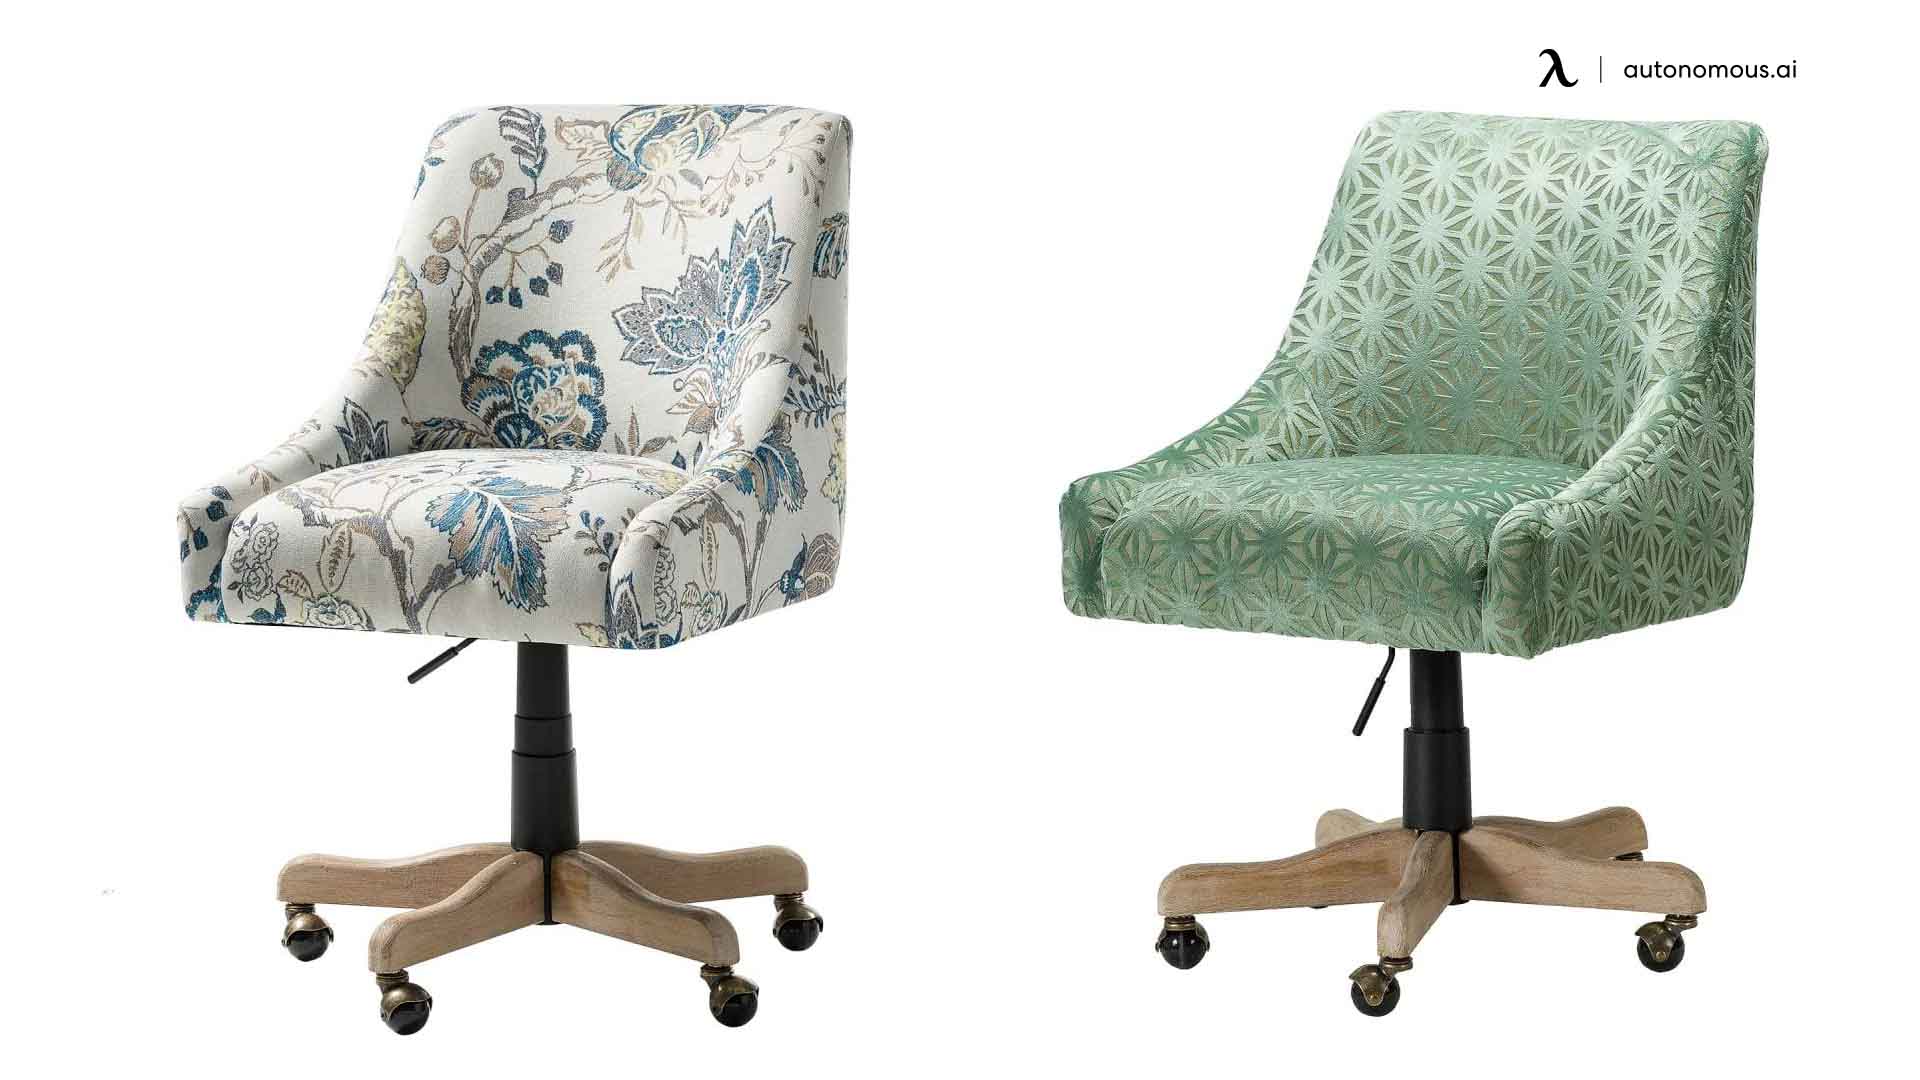 modern ergonomic chair